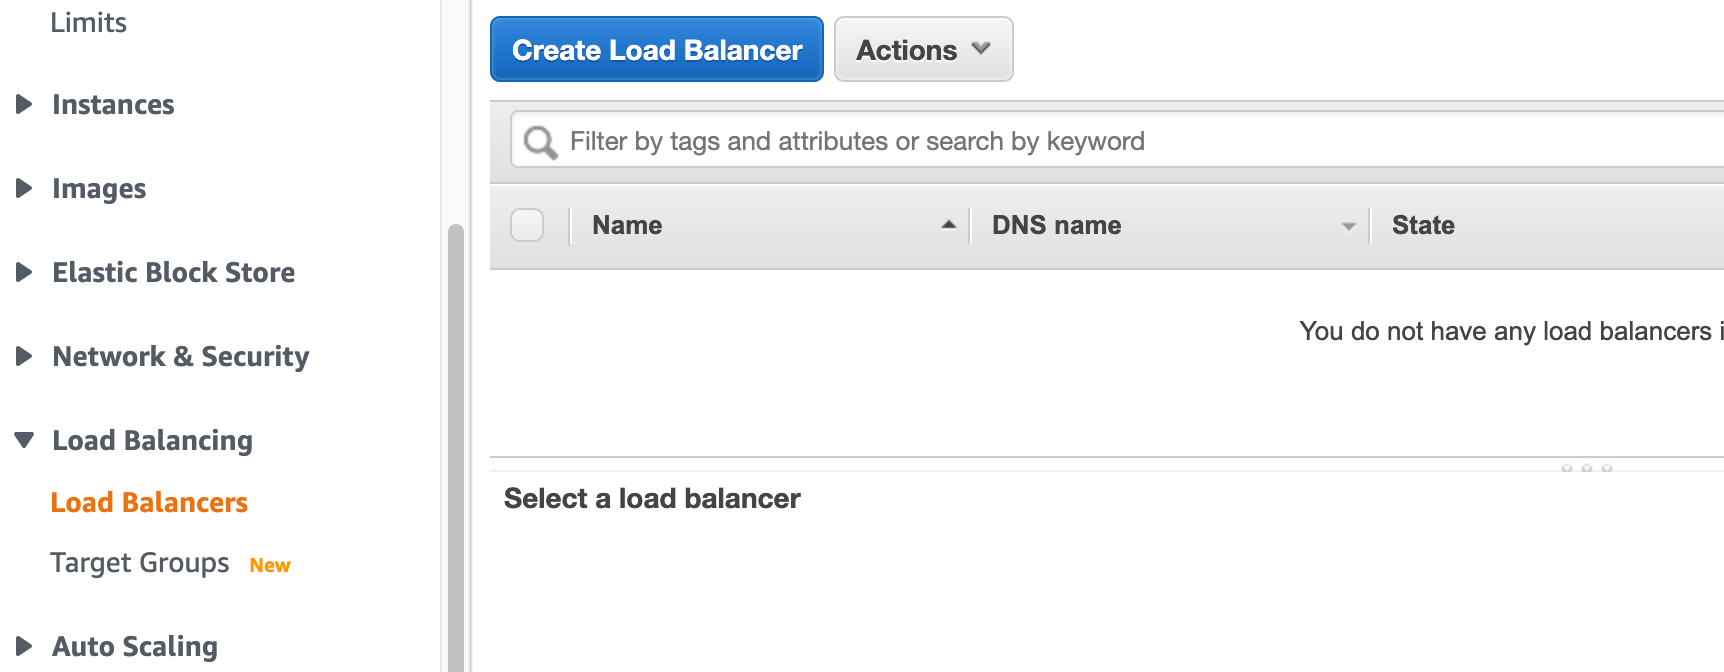 Create Load Balancer